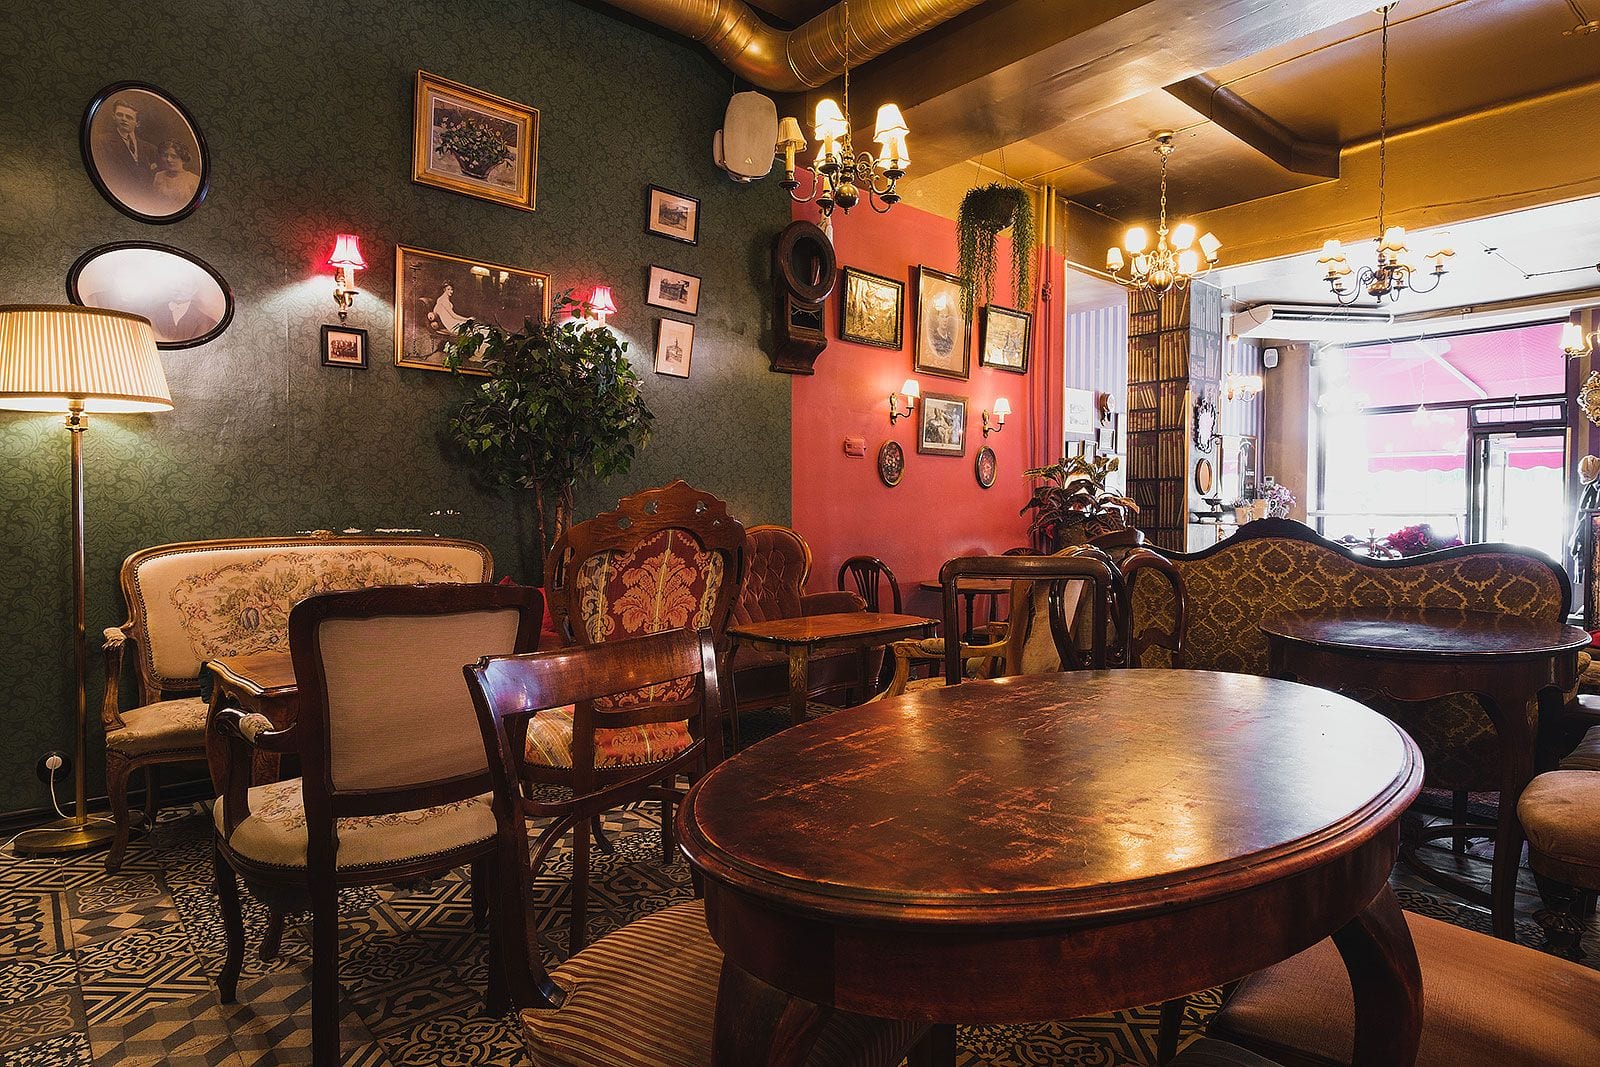 Gildas Rum – Cafés open in the evenings